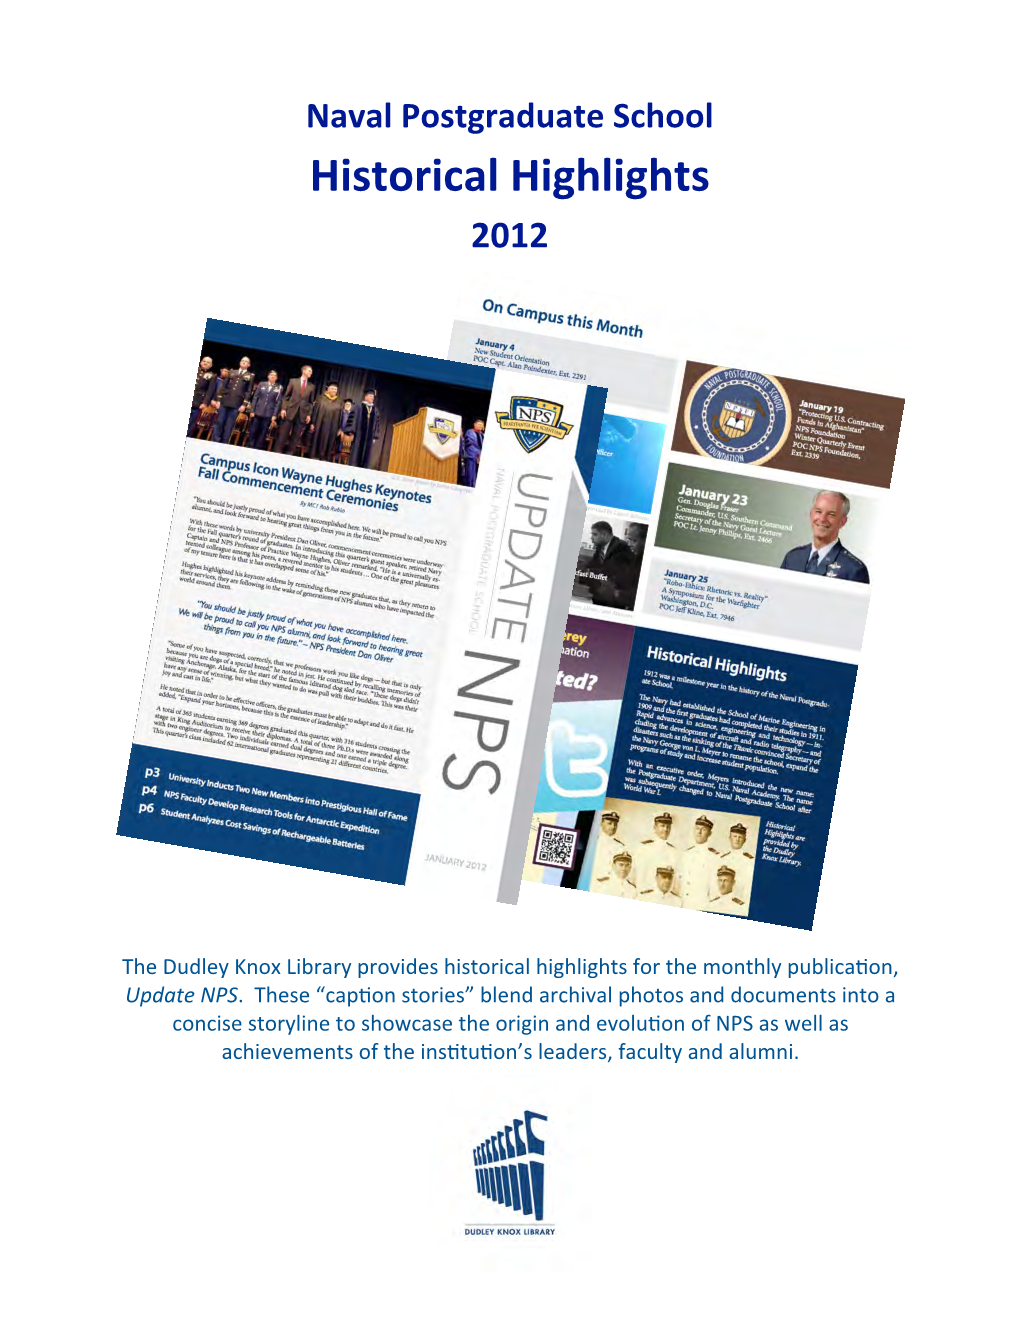 Naval Postgraduate School Historical Highlights 2012